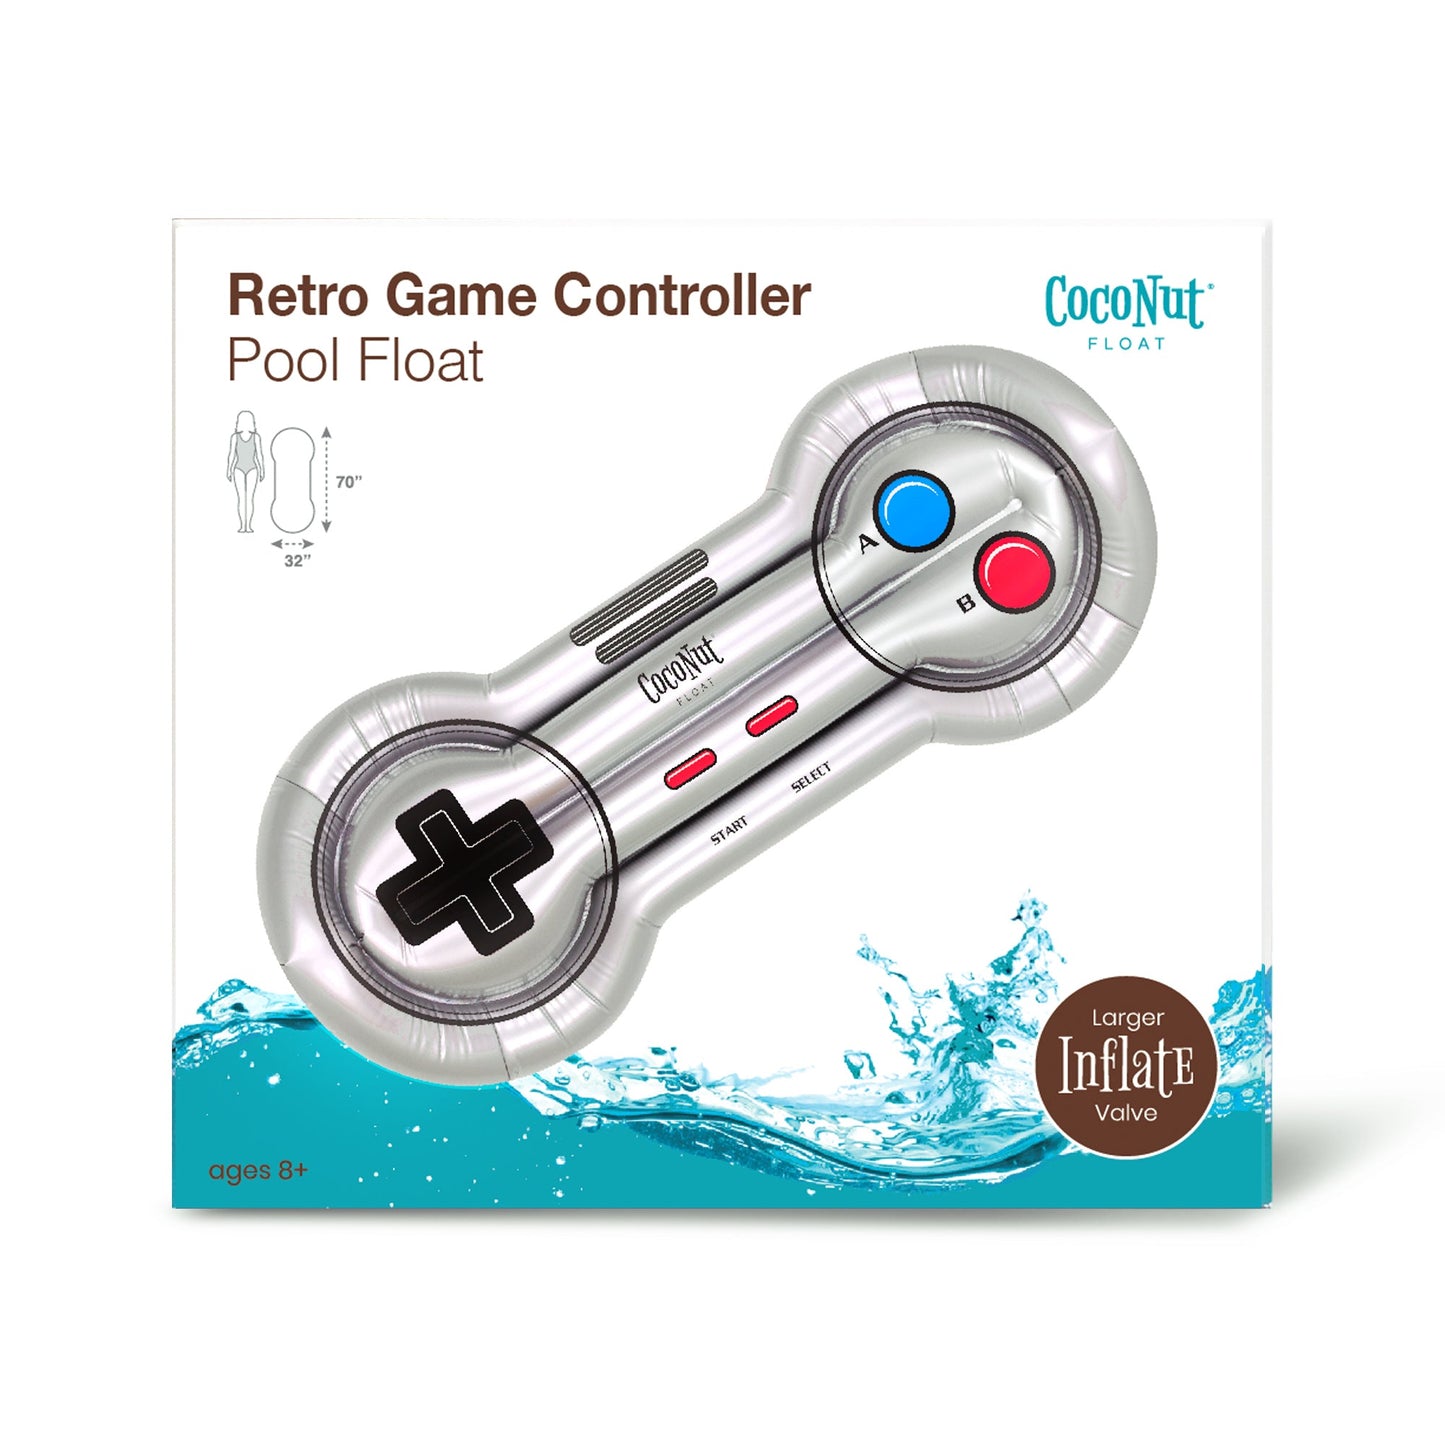 Retro Game Controller Pool Float